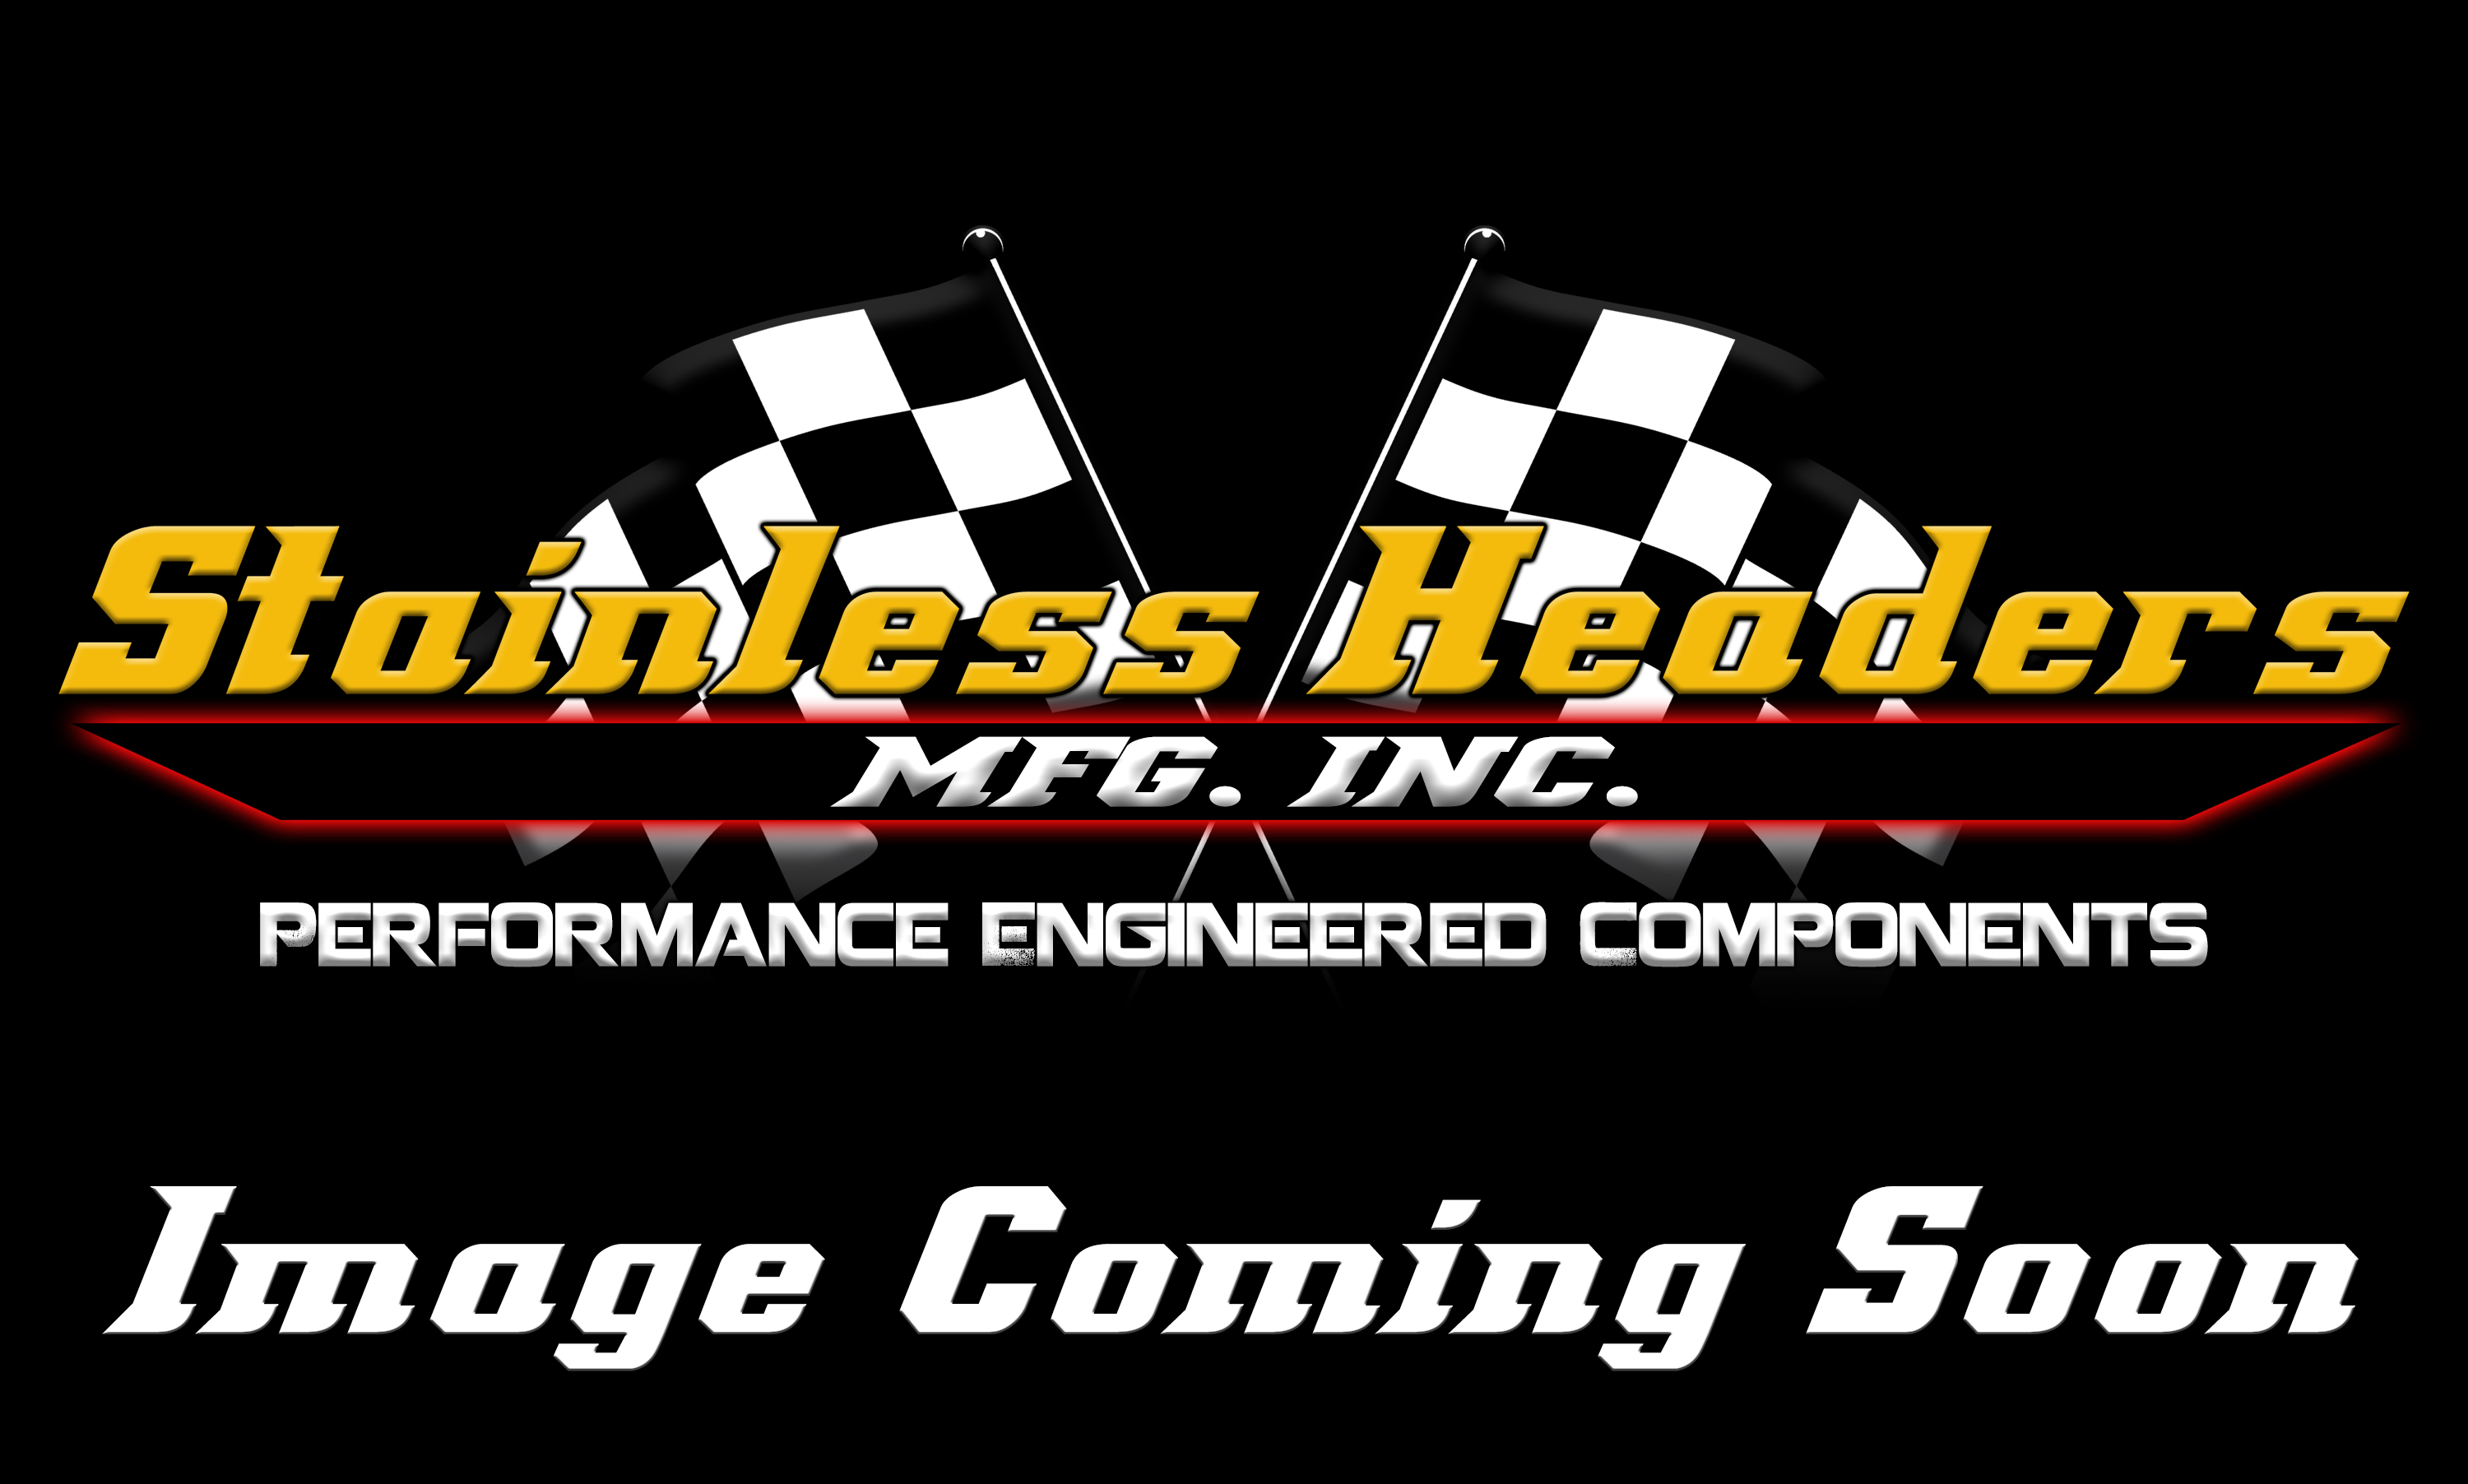 Stainless Headers - Gen II 426 Hemi Turbo Manifold Build Kit - Image 5